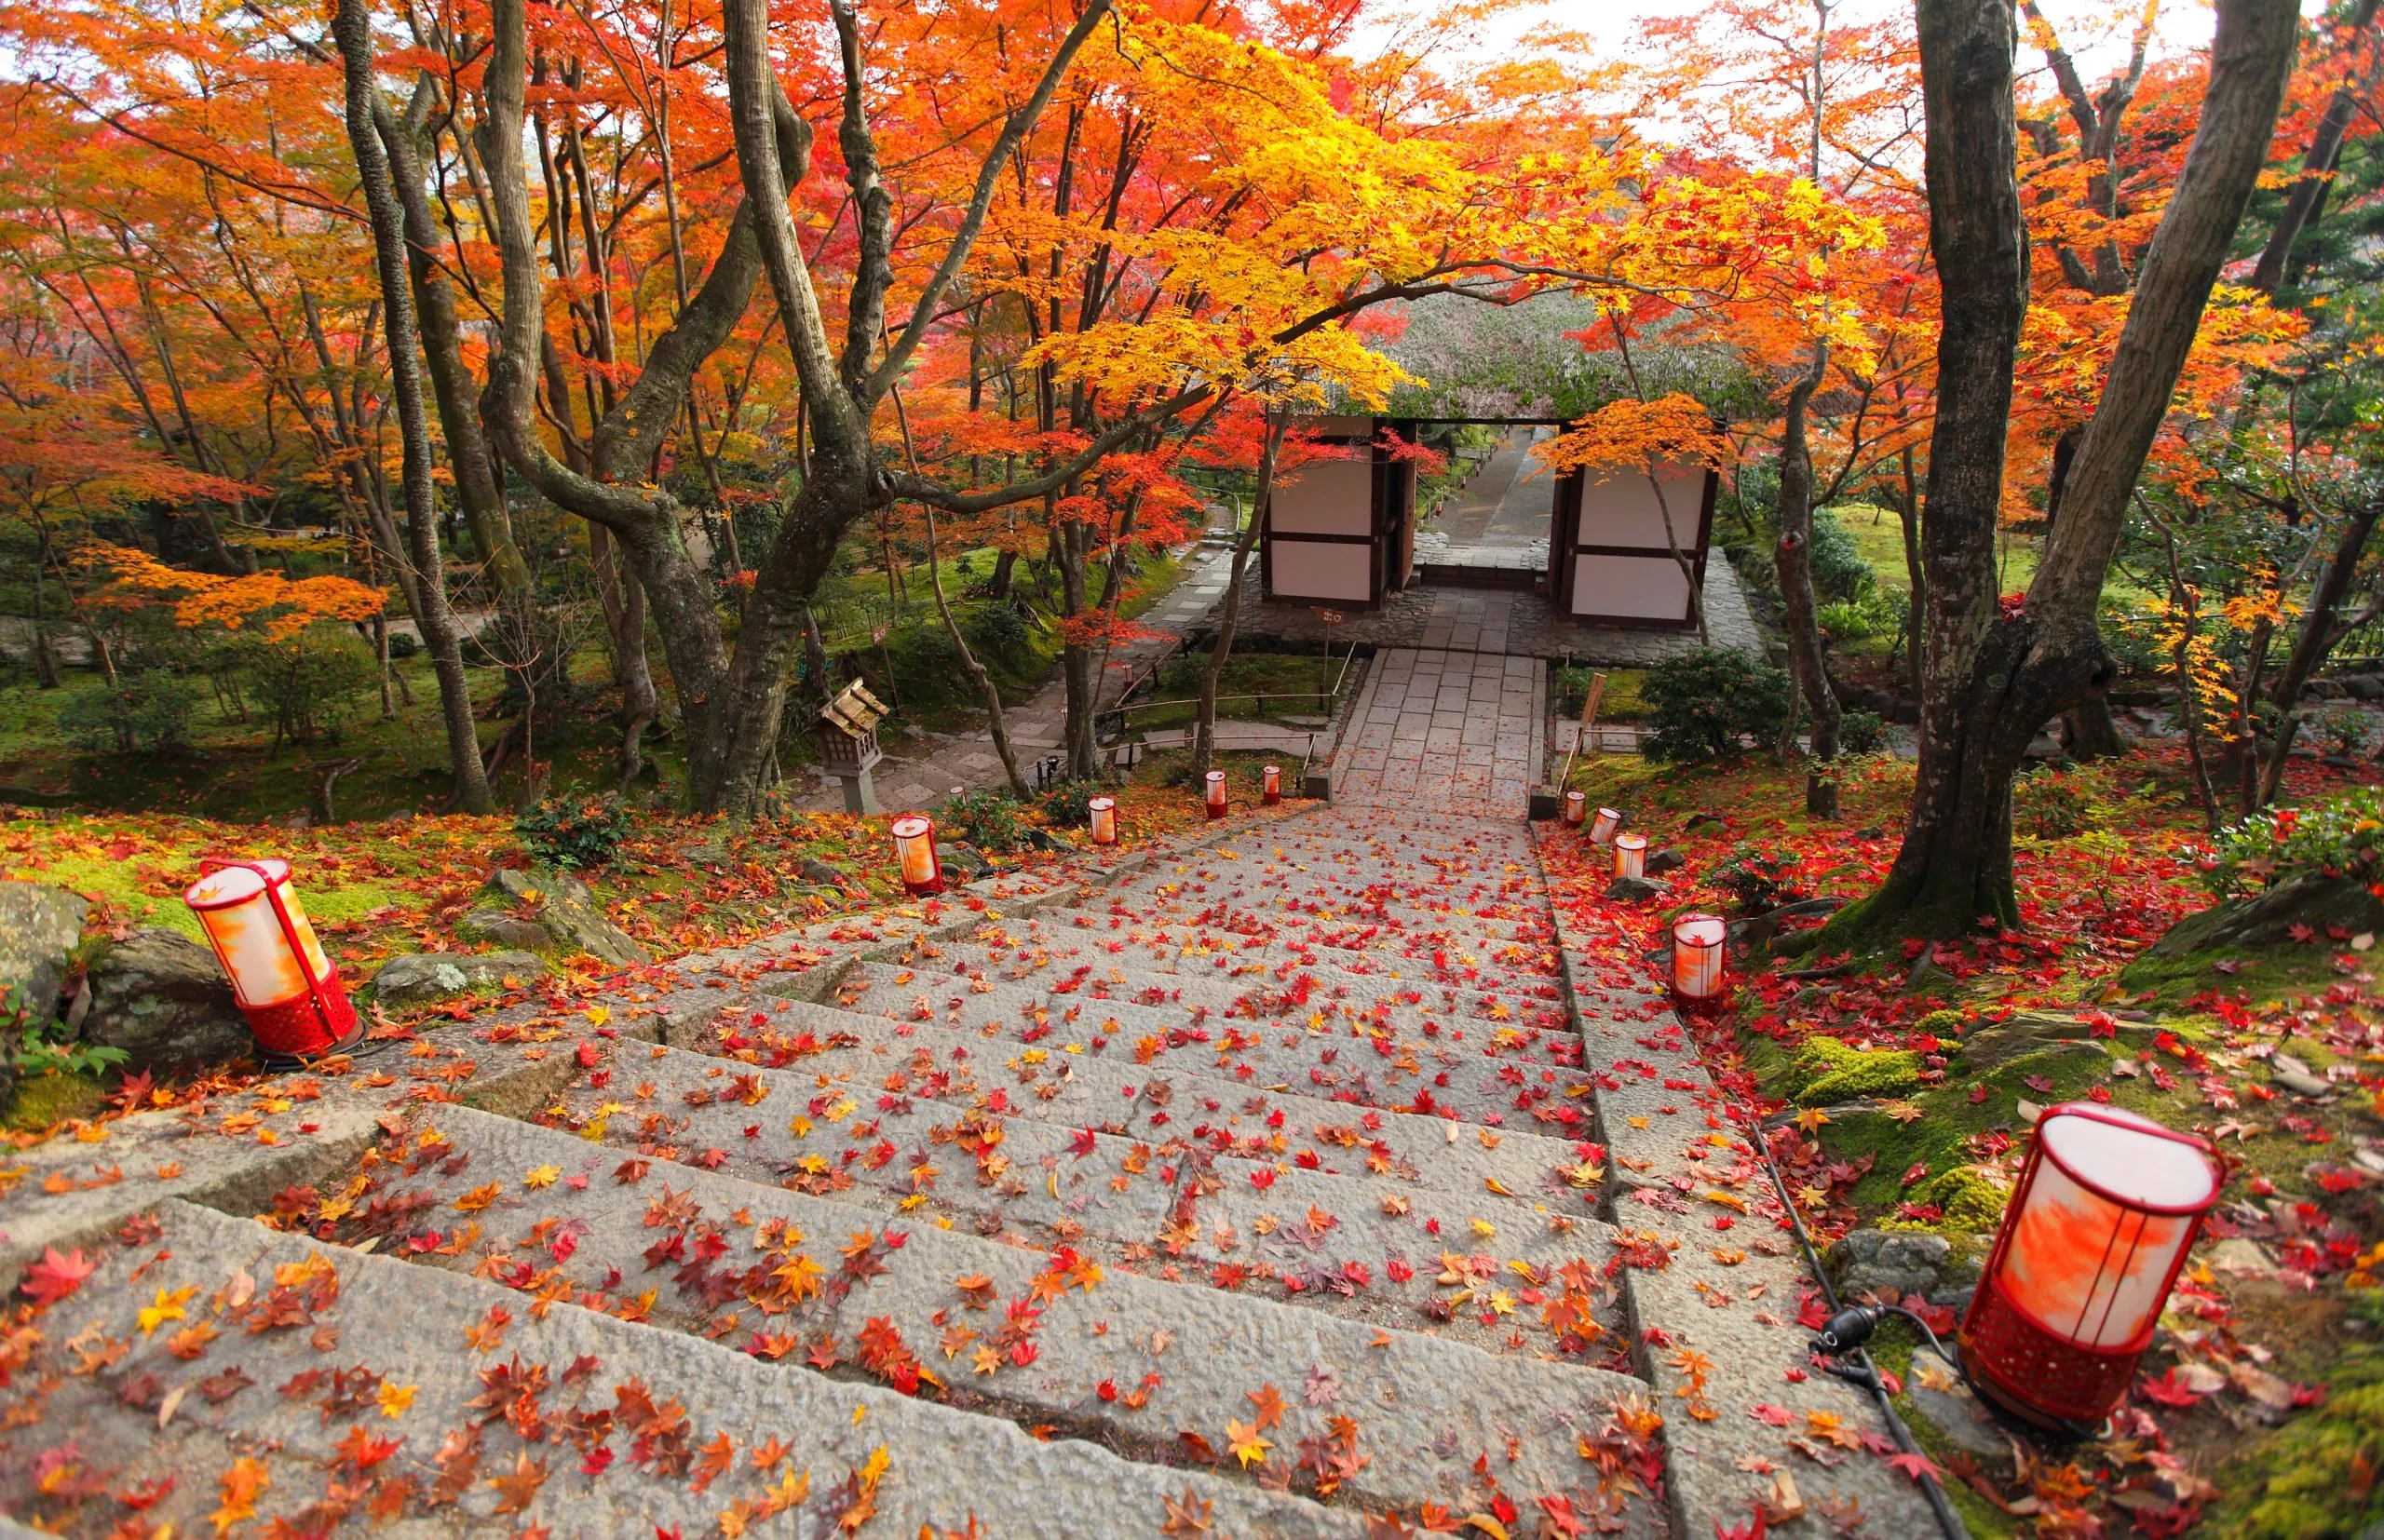 Jojakko-ji Temple in Japan, East Asia | Architecture,Gardens - Rated 3.7